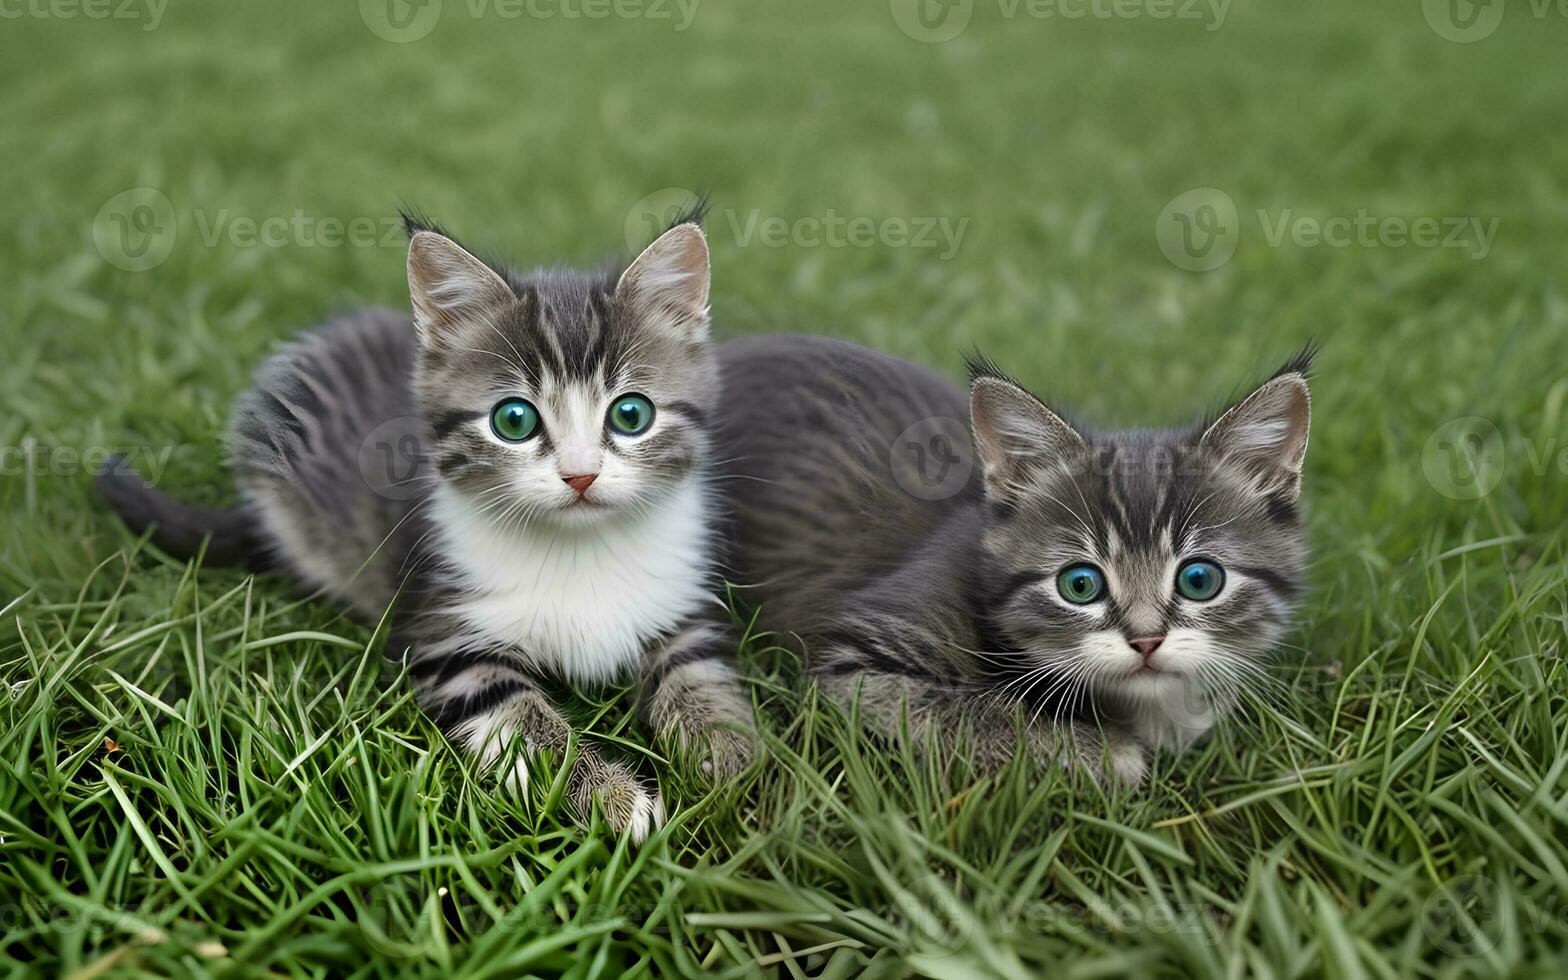 Cute little cat in green grass by slight blurred background. AI Generative photo